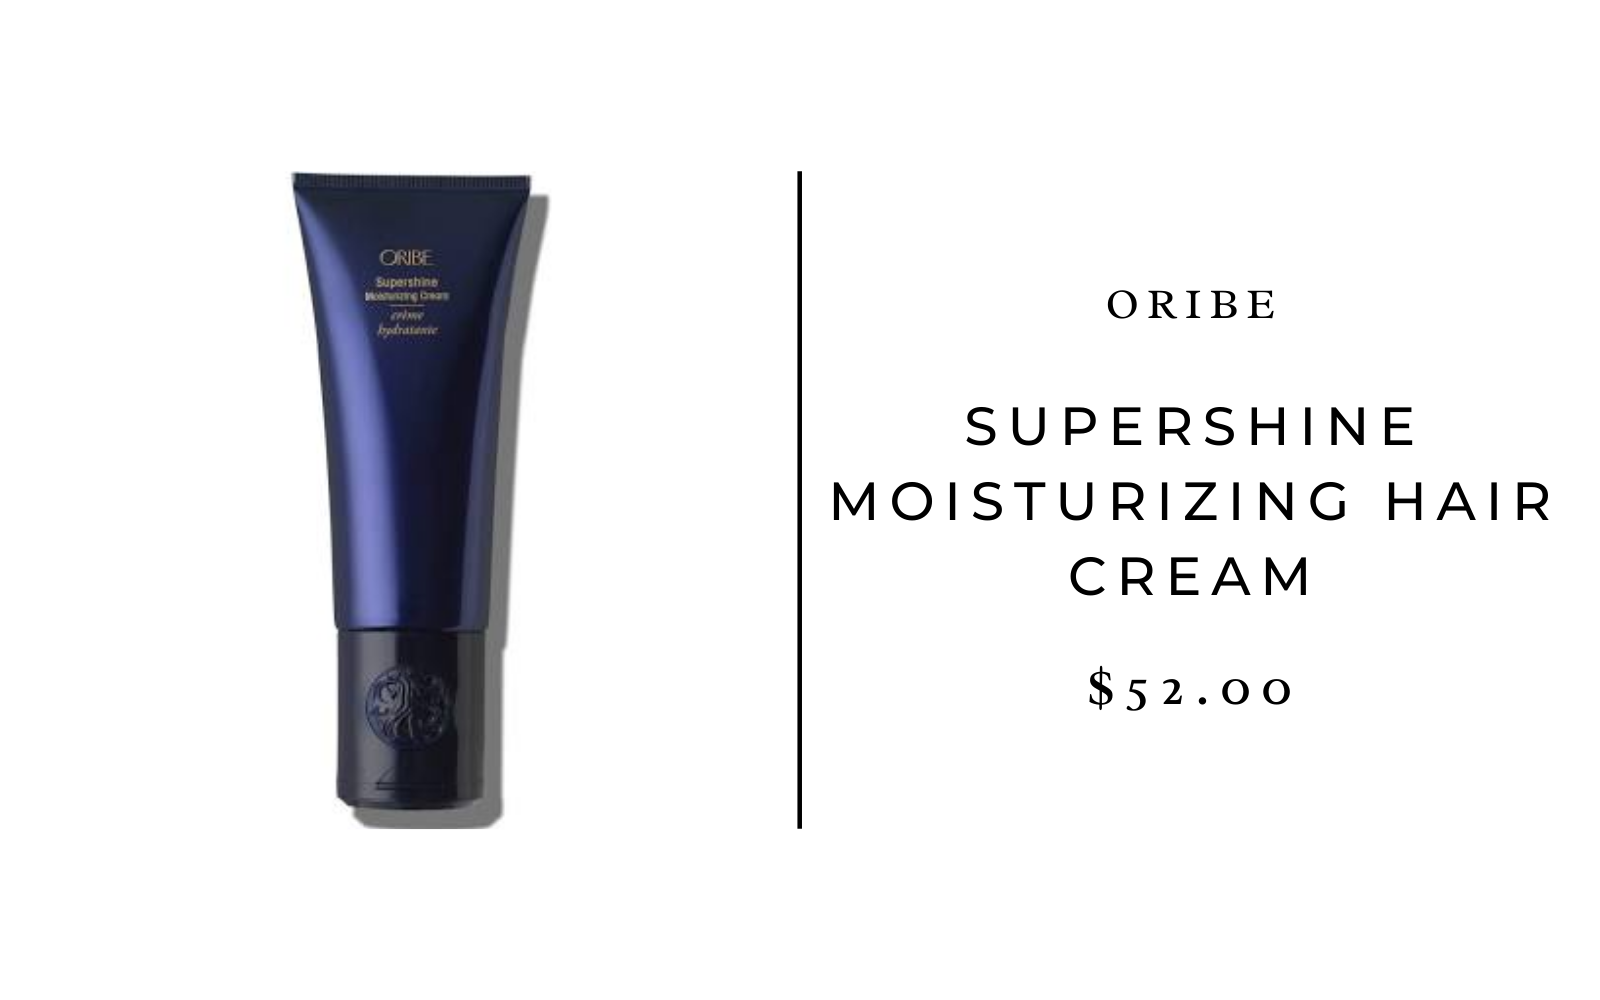 Oribe Supershine Moisturizing Hair Cream